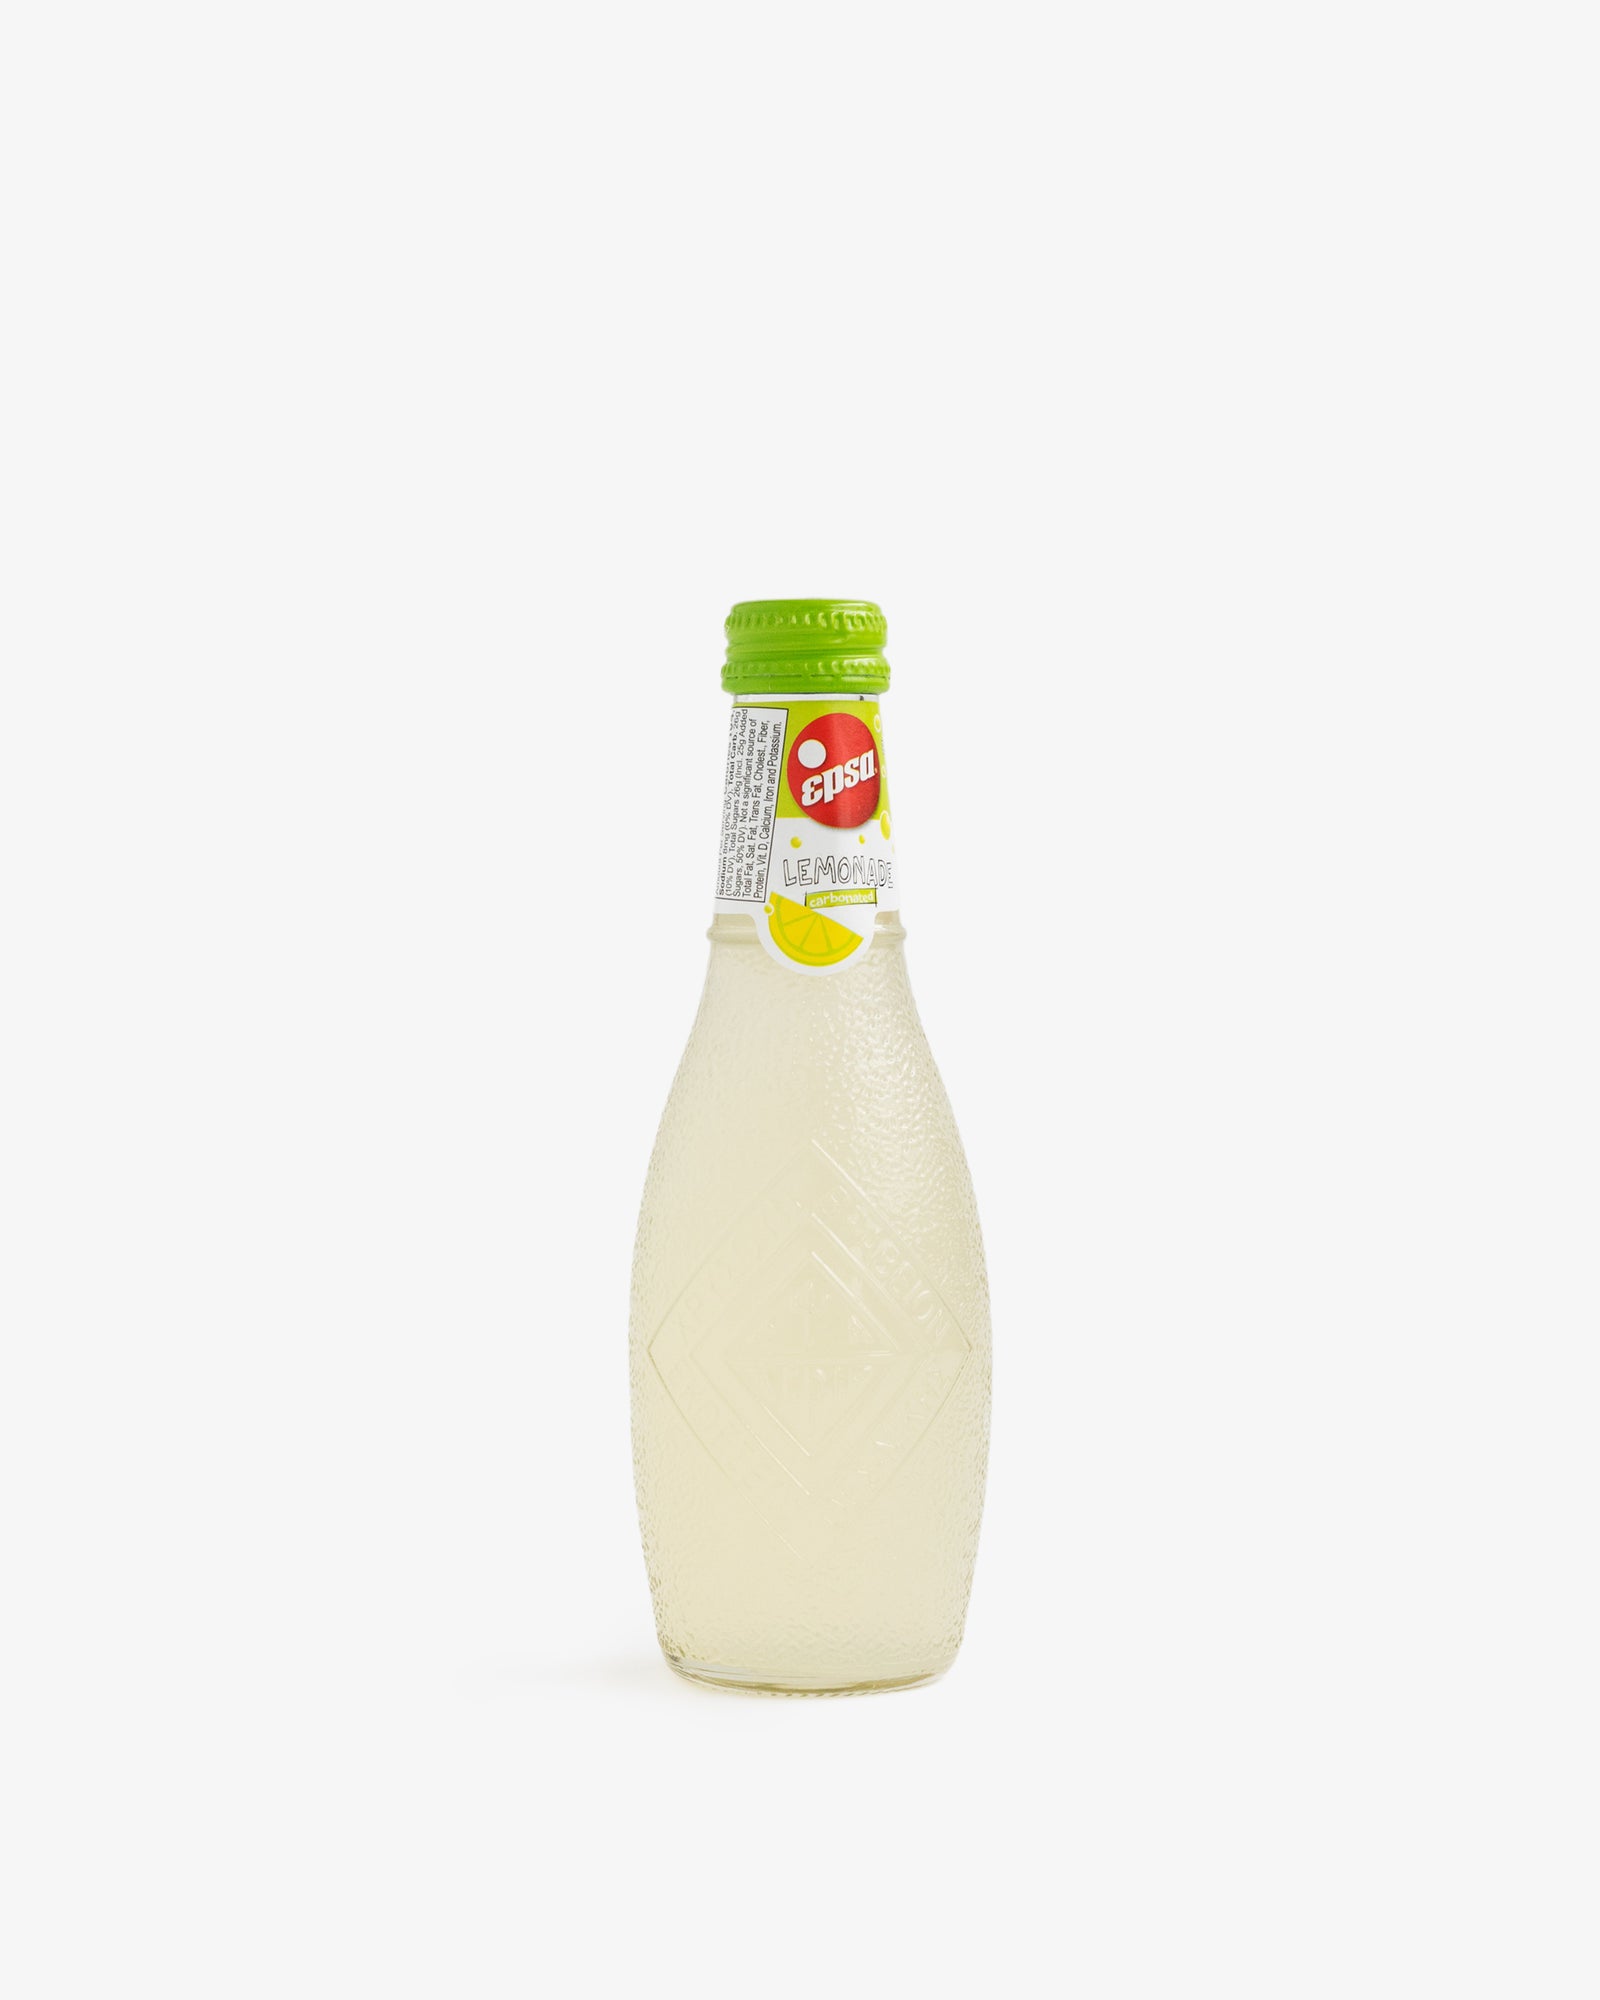 Epsa (Lemonada)